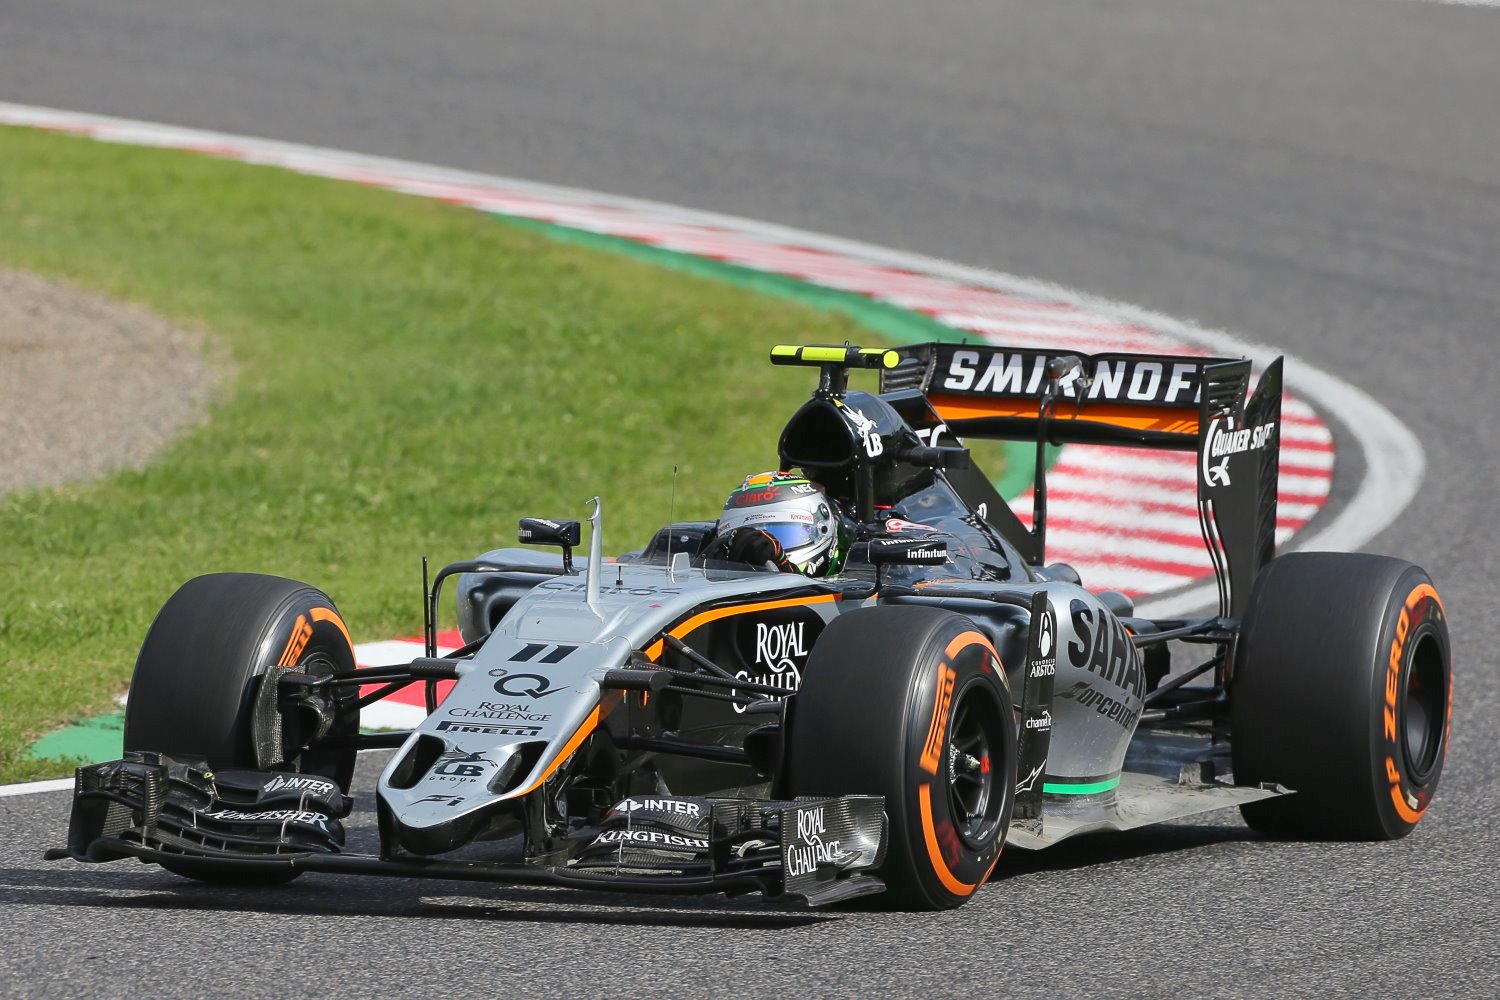 Sergio Perez in the Force India